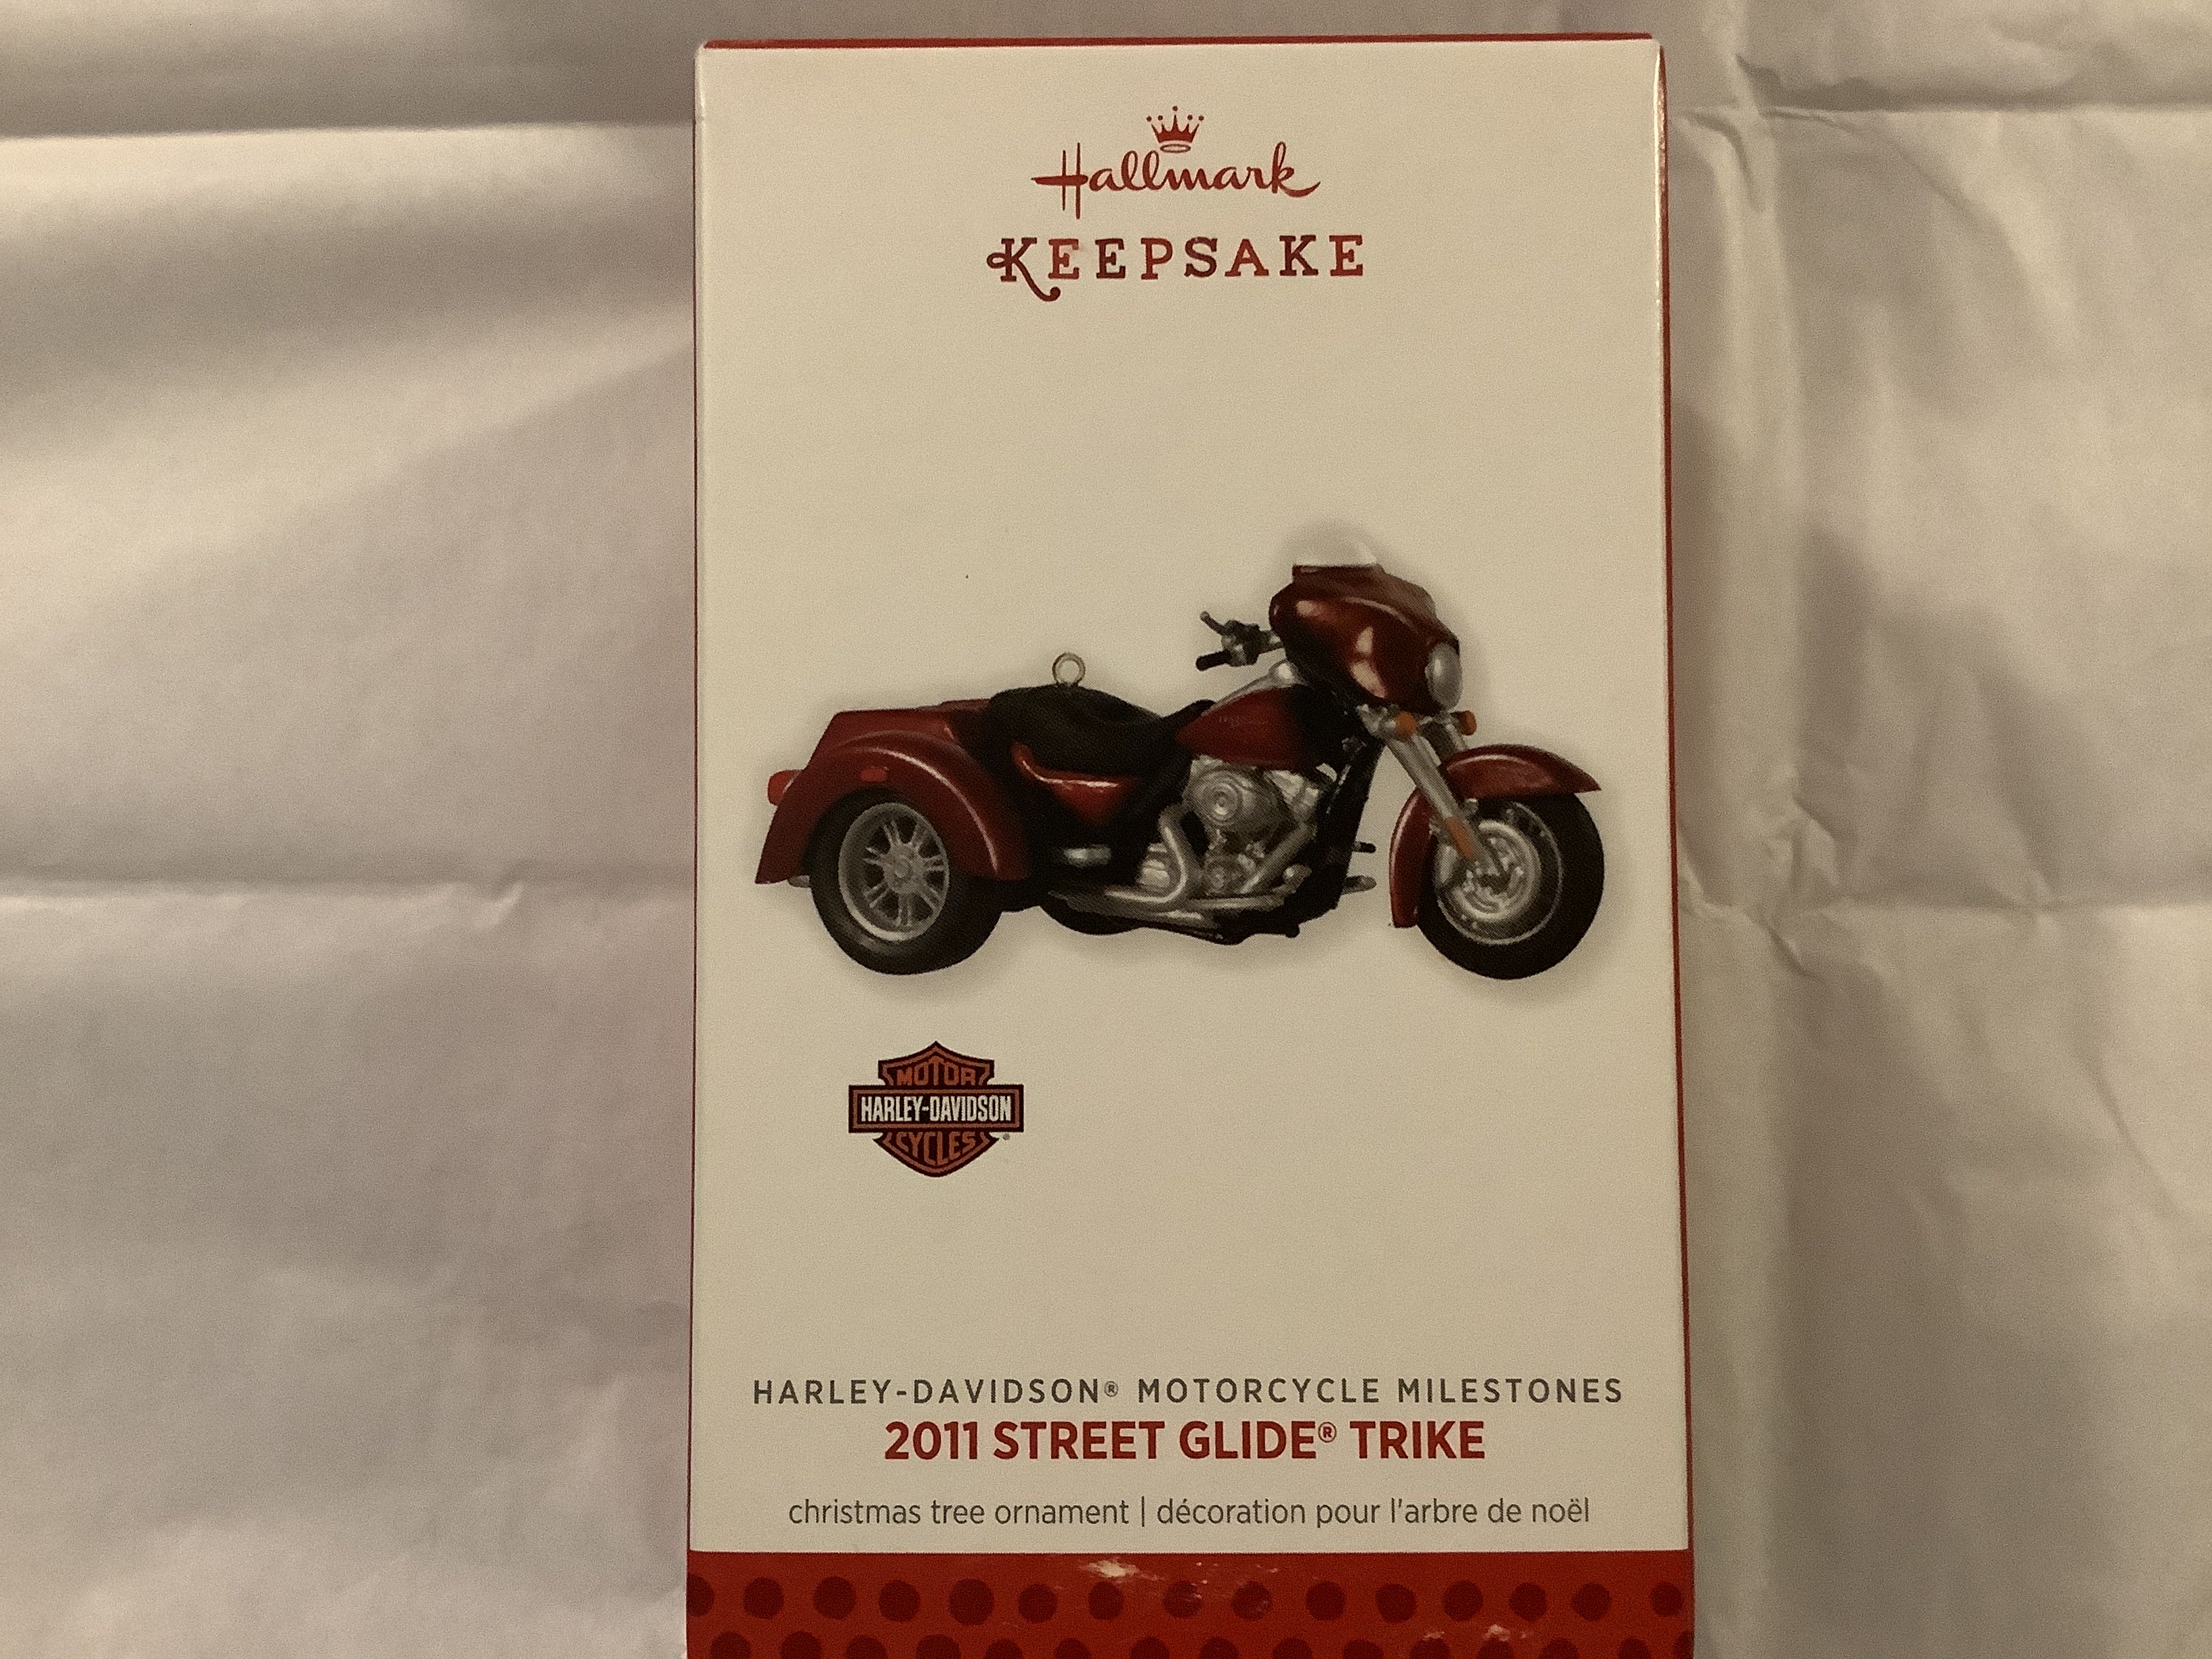 2011 Street Glide Trike - Harley Davidson Motorcycle Milestones (Harley-Davidson) ornament collectible [Barcode 795902340292] - Main Image 2